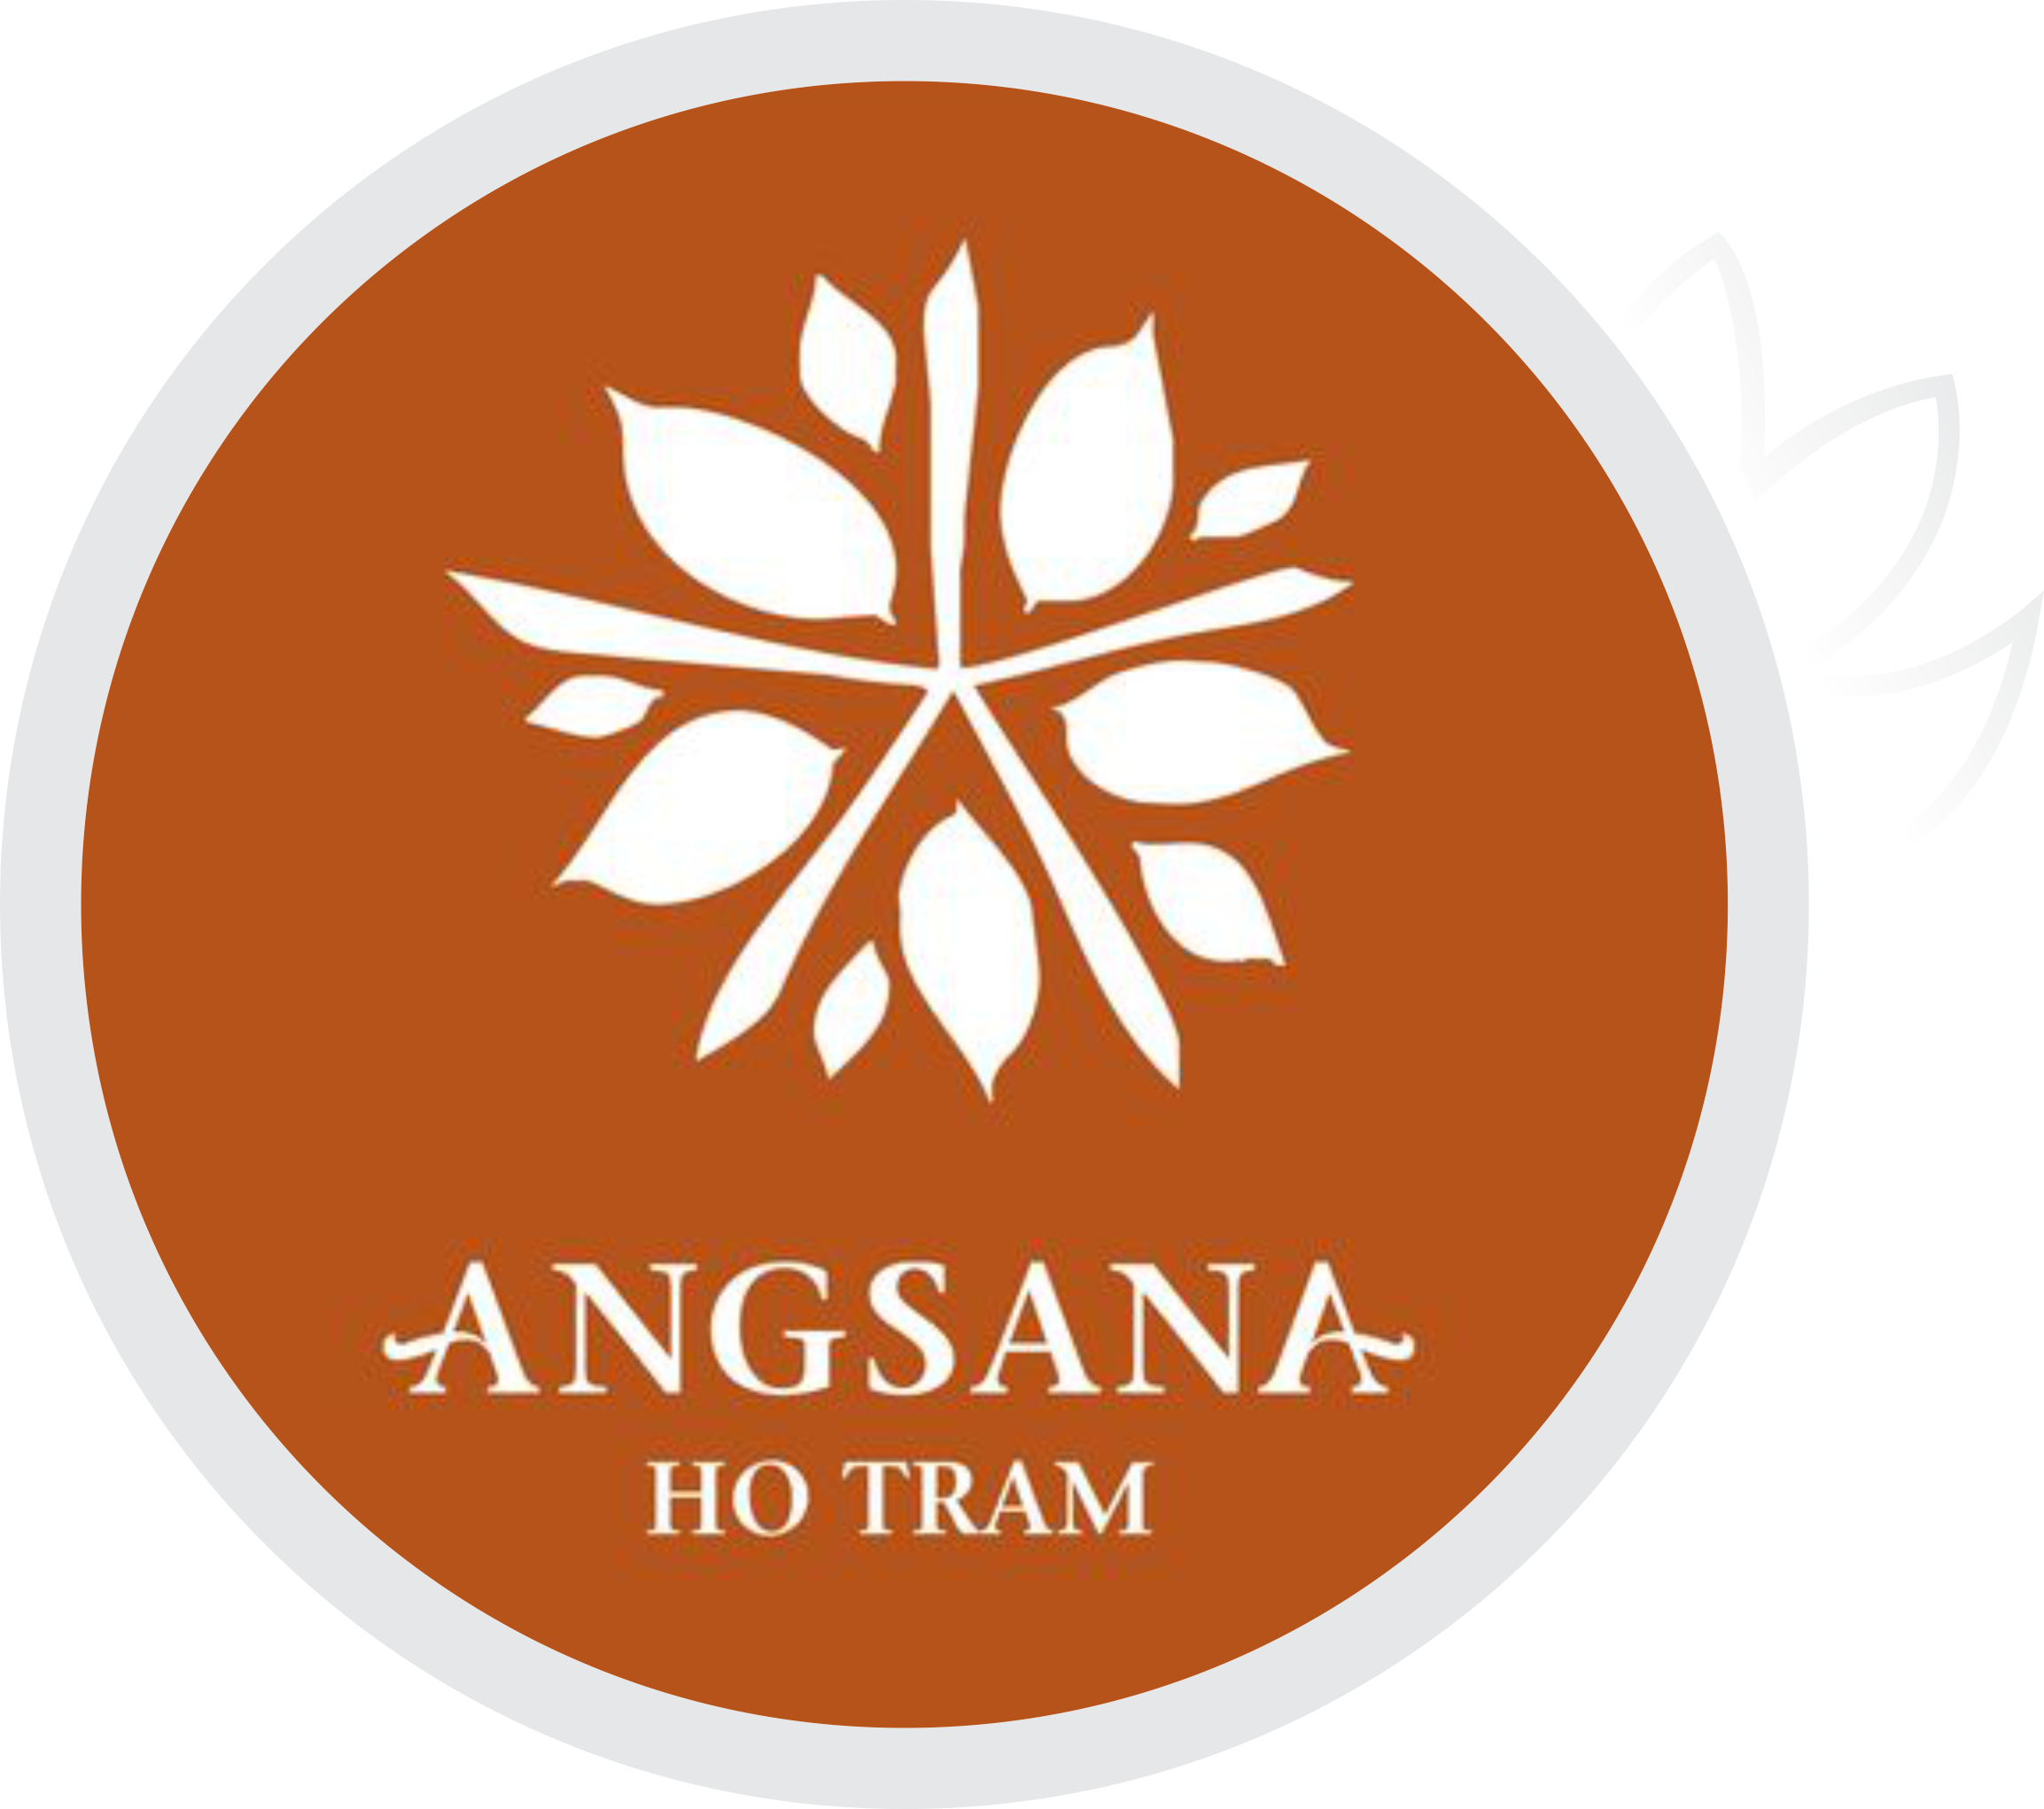 Angsana Hồ Tràm logo